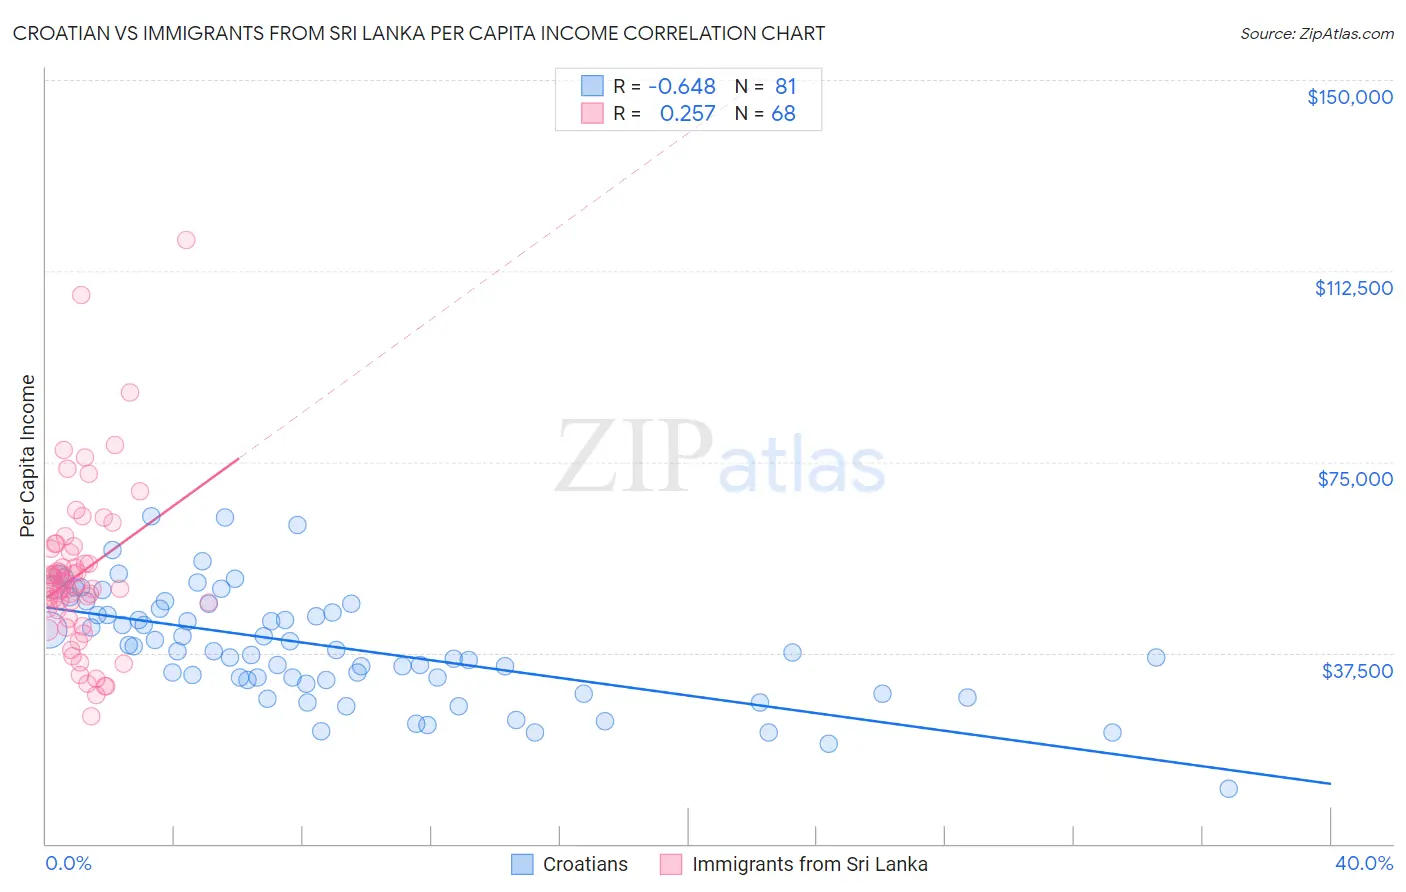 Croatian vs Immigrants from Sri Lanka Per Capita Income